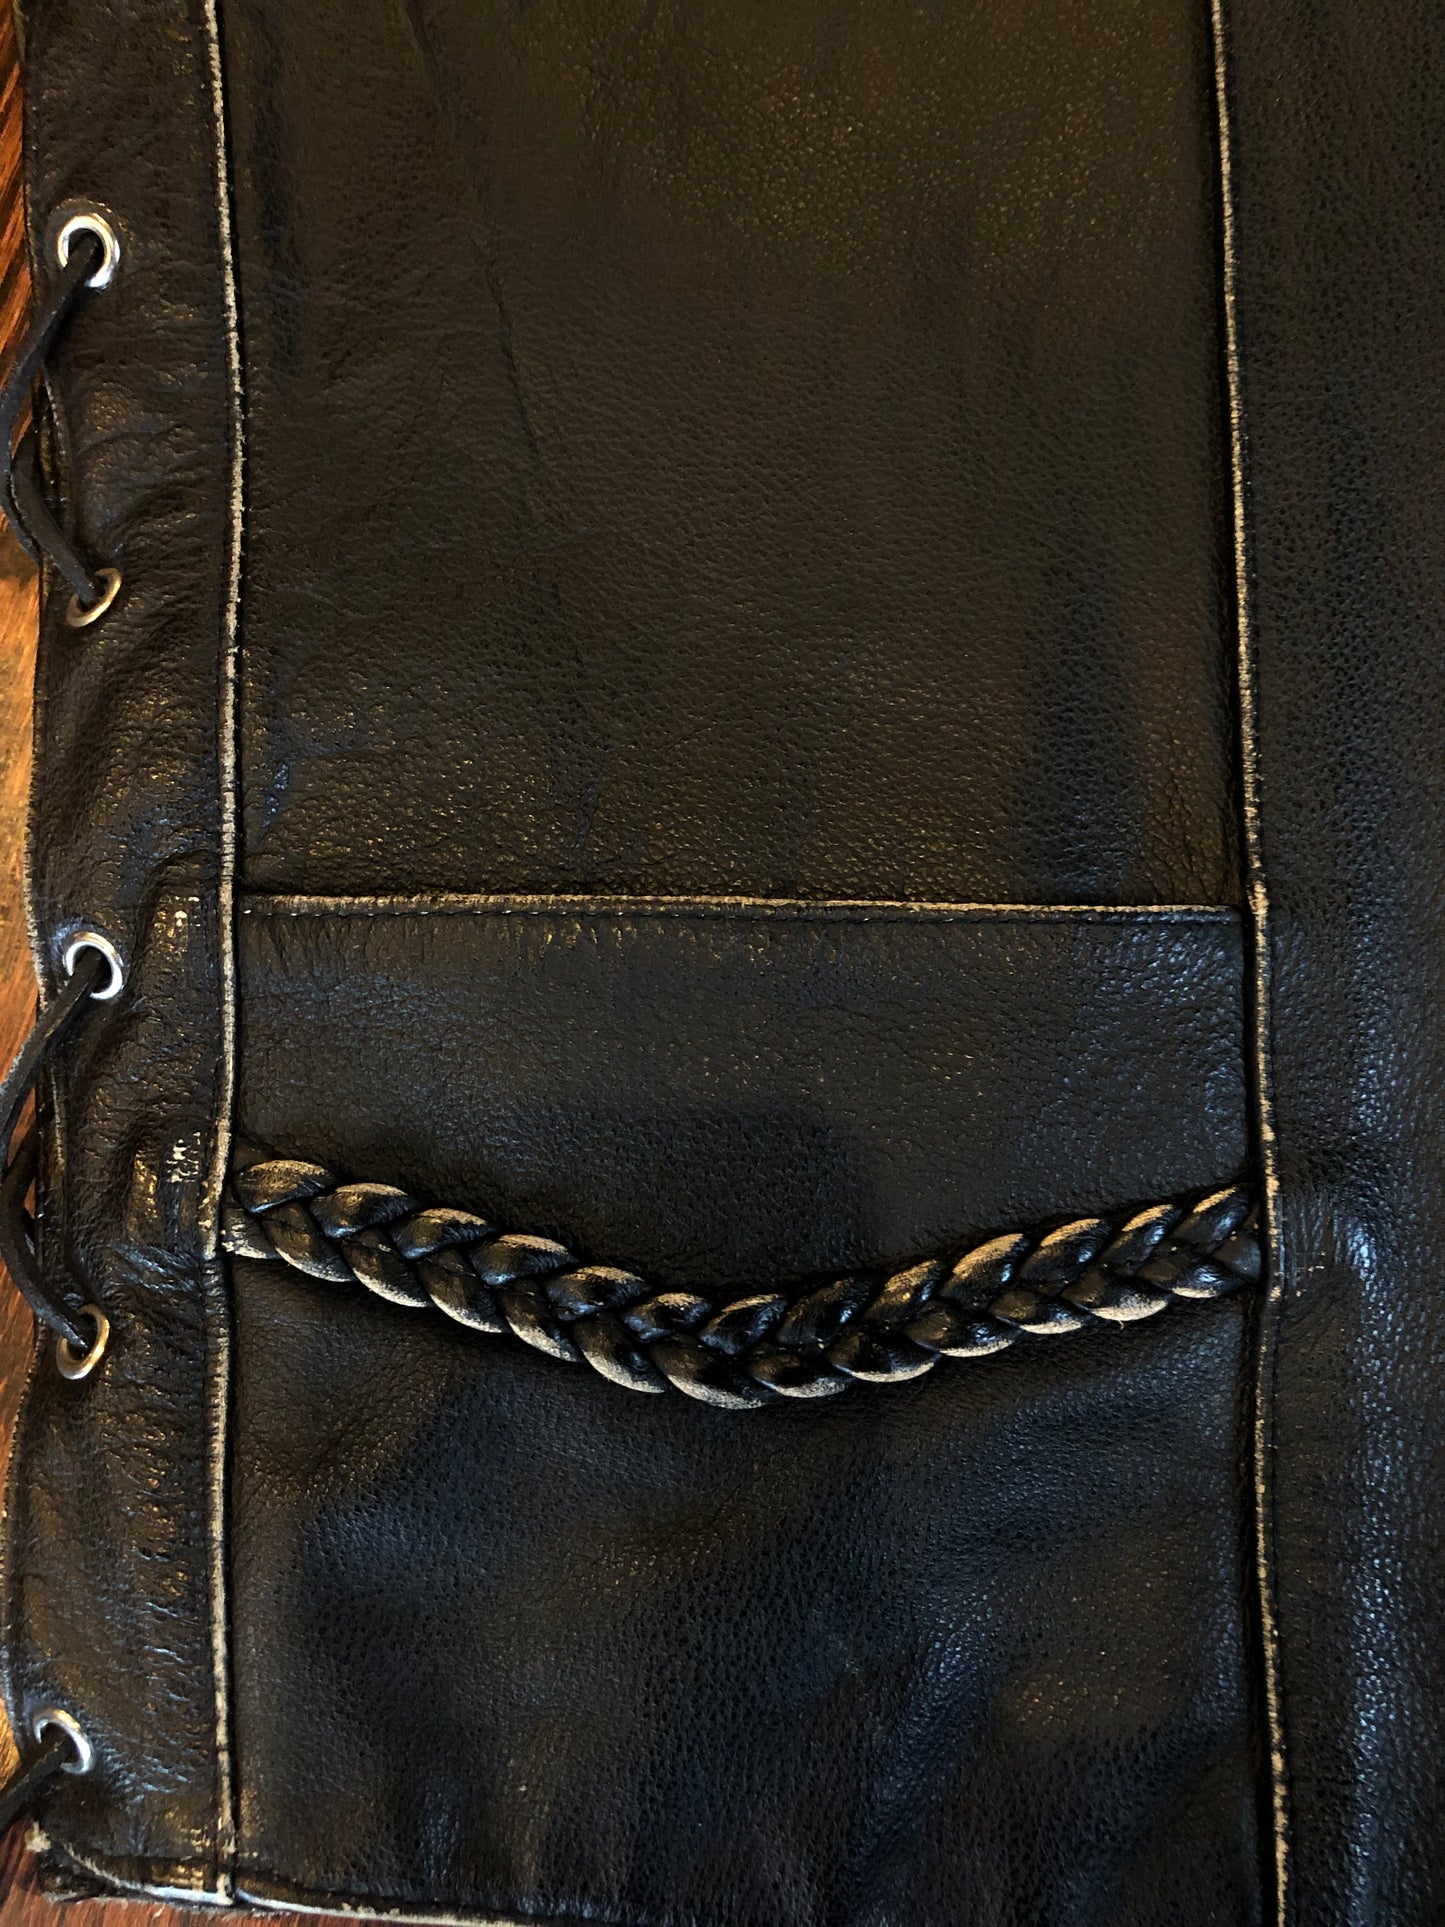 Interstate Black Leather Snap Button Vest w/ Braided Details